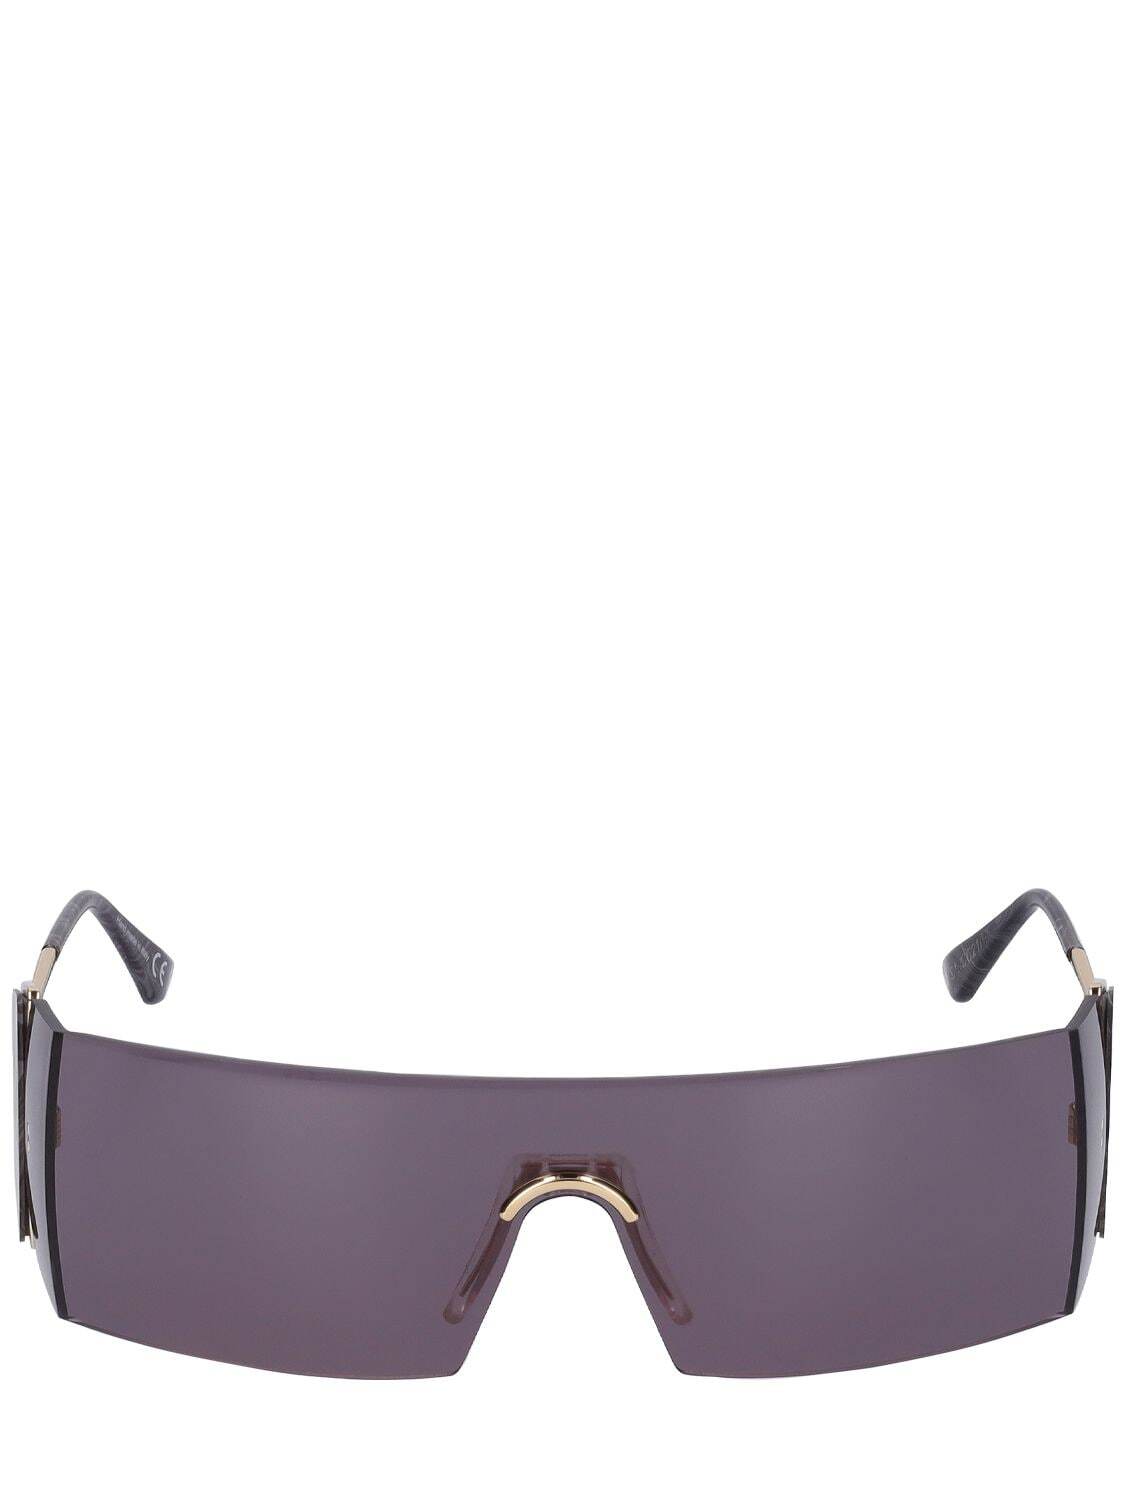 RETROSUPERFUTURE Pianeta Squared Mask Sunglasses in black / multi